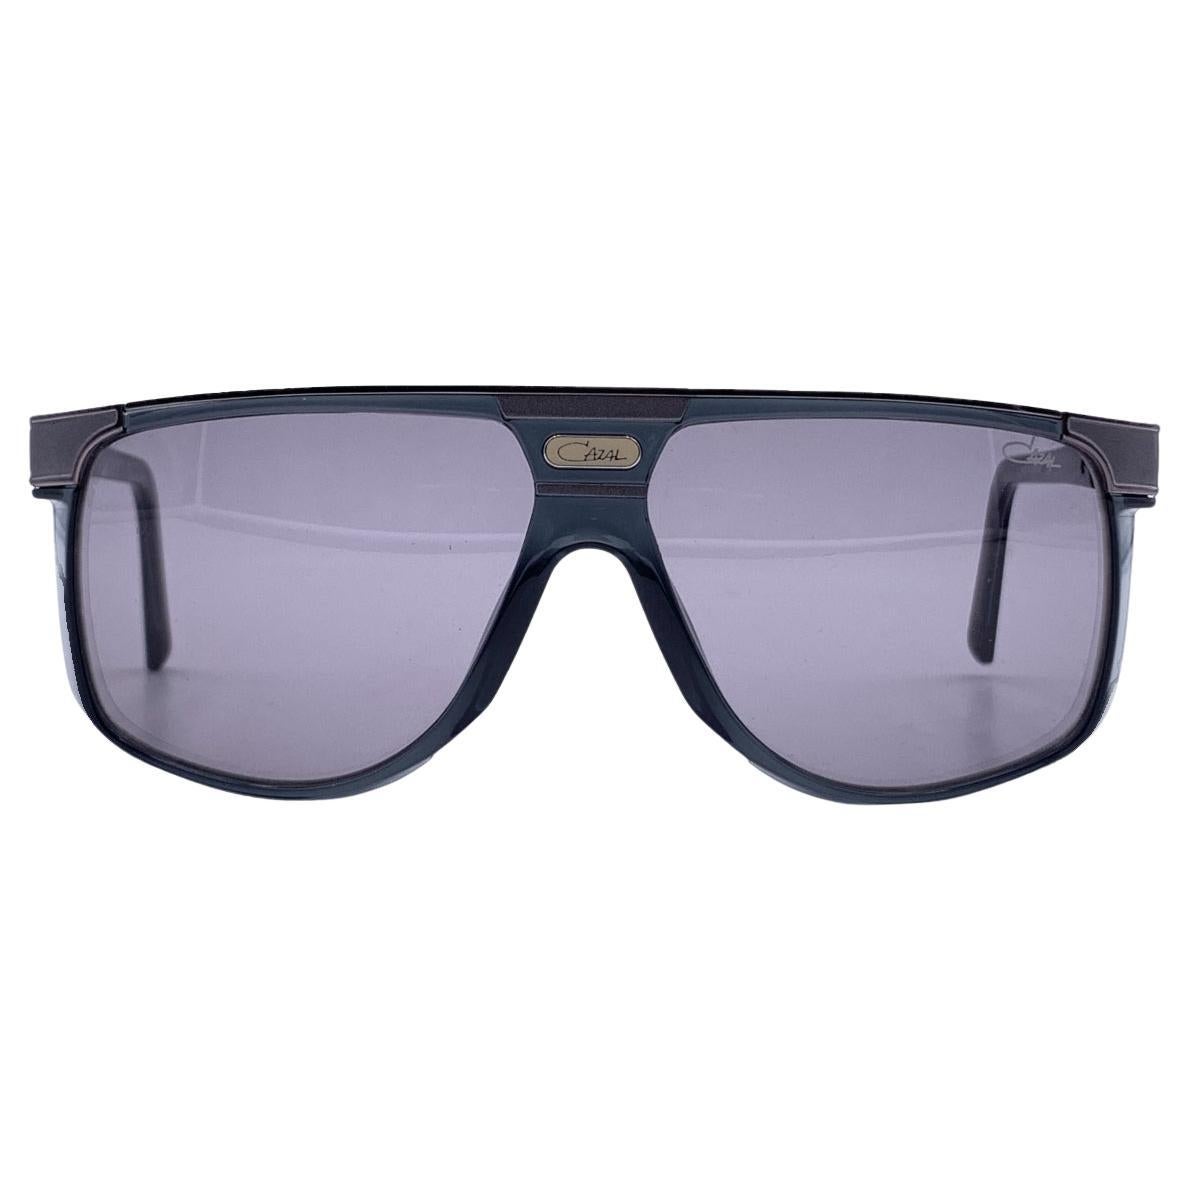 Cazal Grey Gunmetal Acetate Sunglasses Mod. 673 003 61/12 150 mm